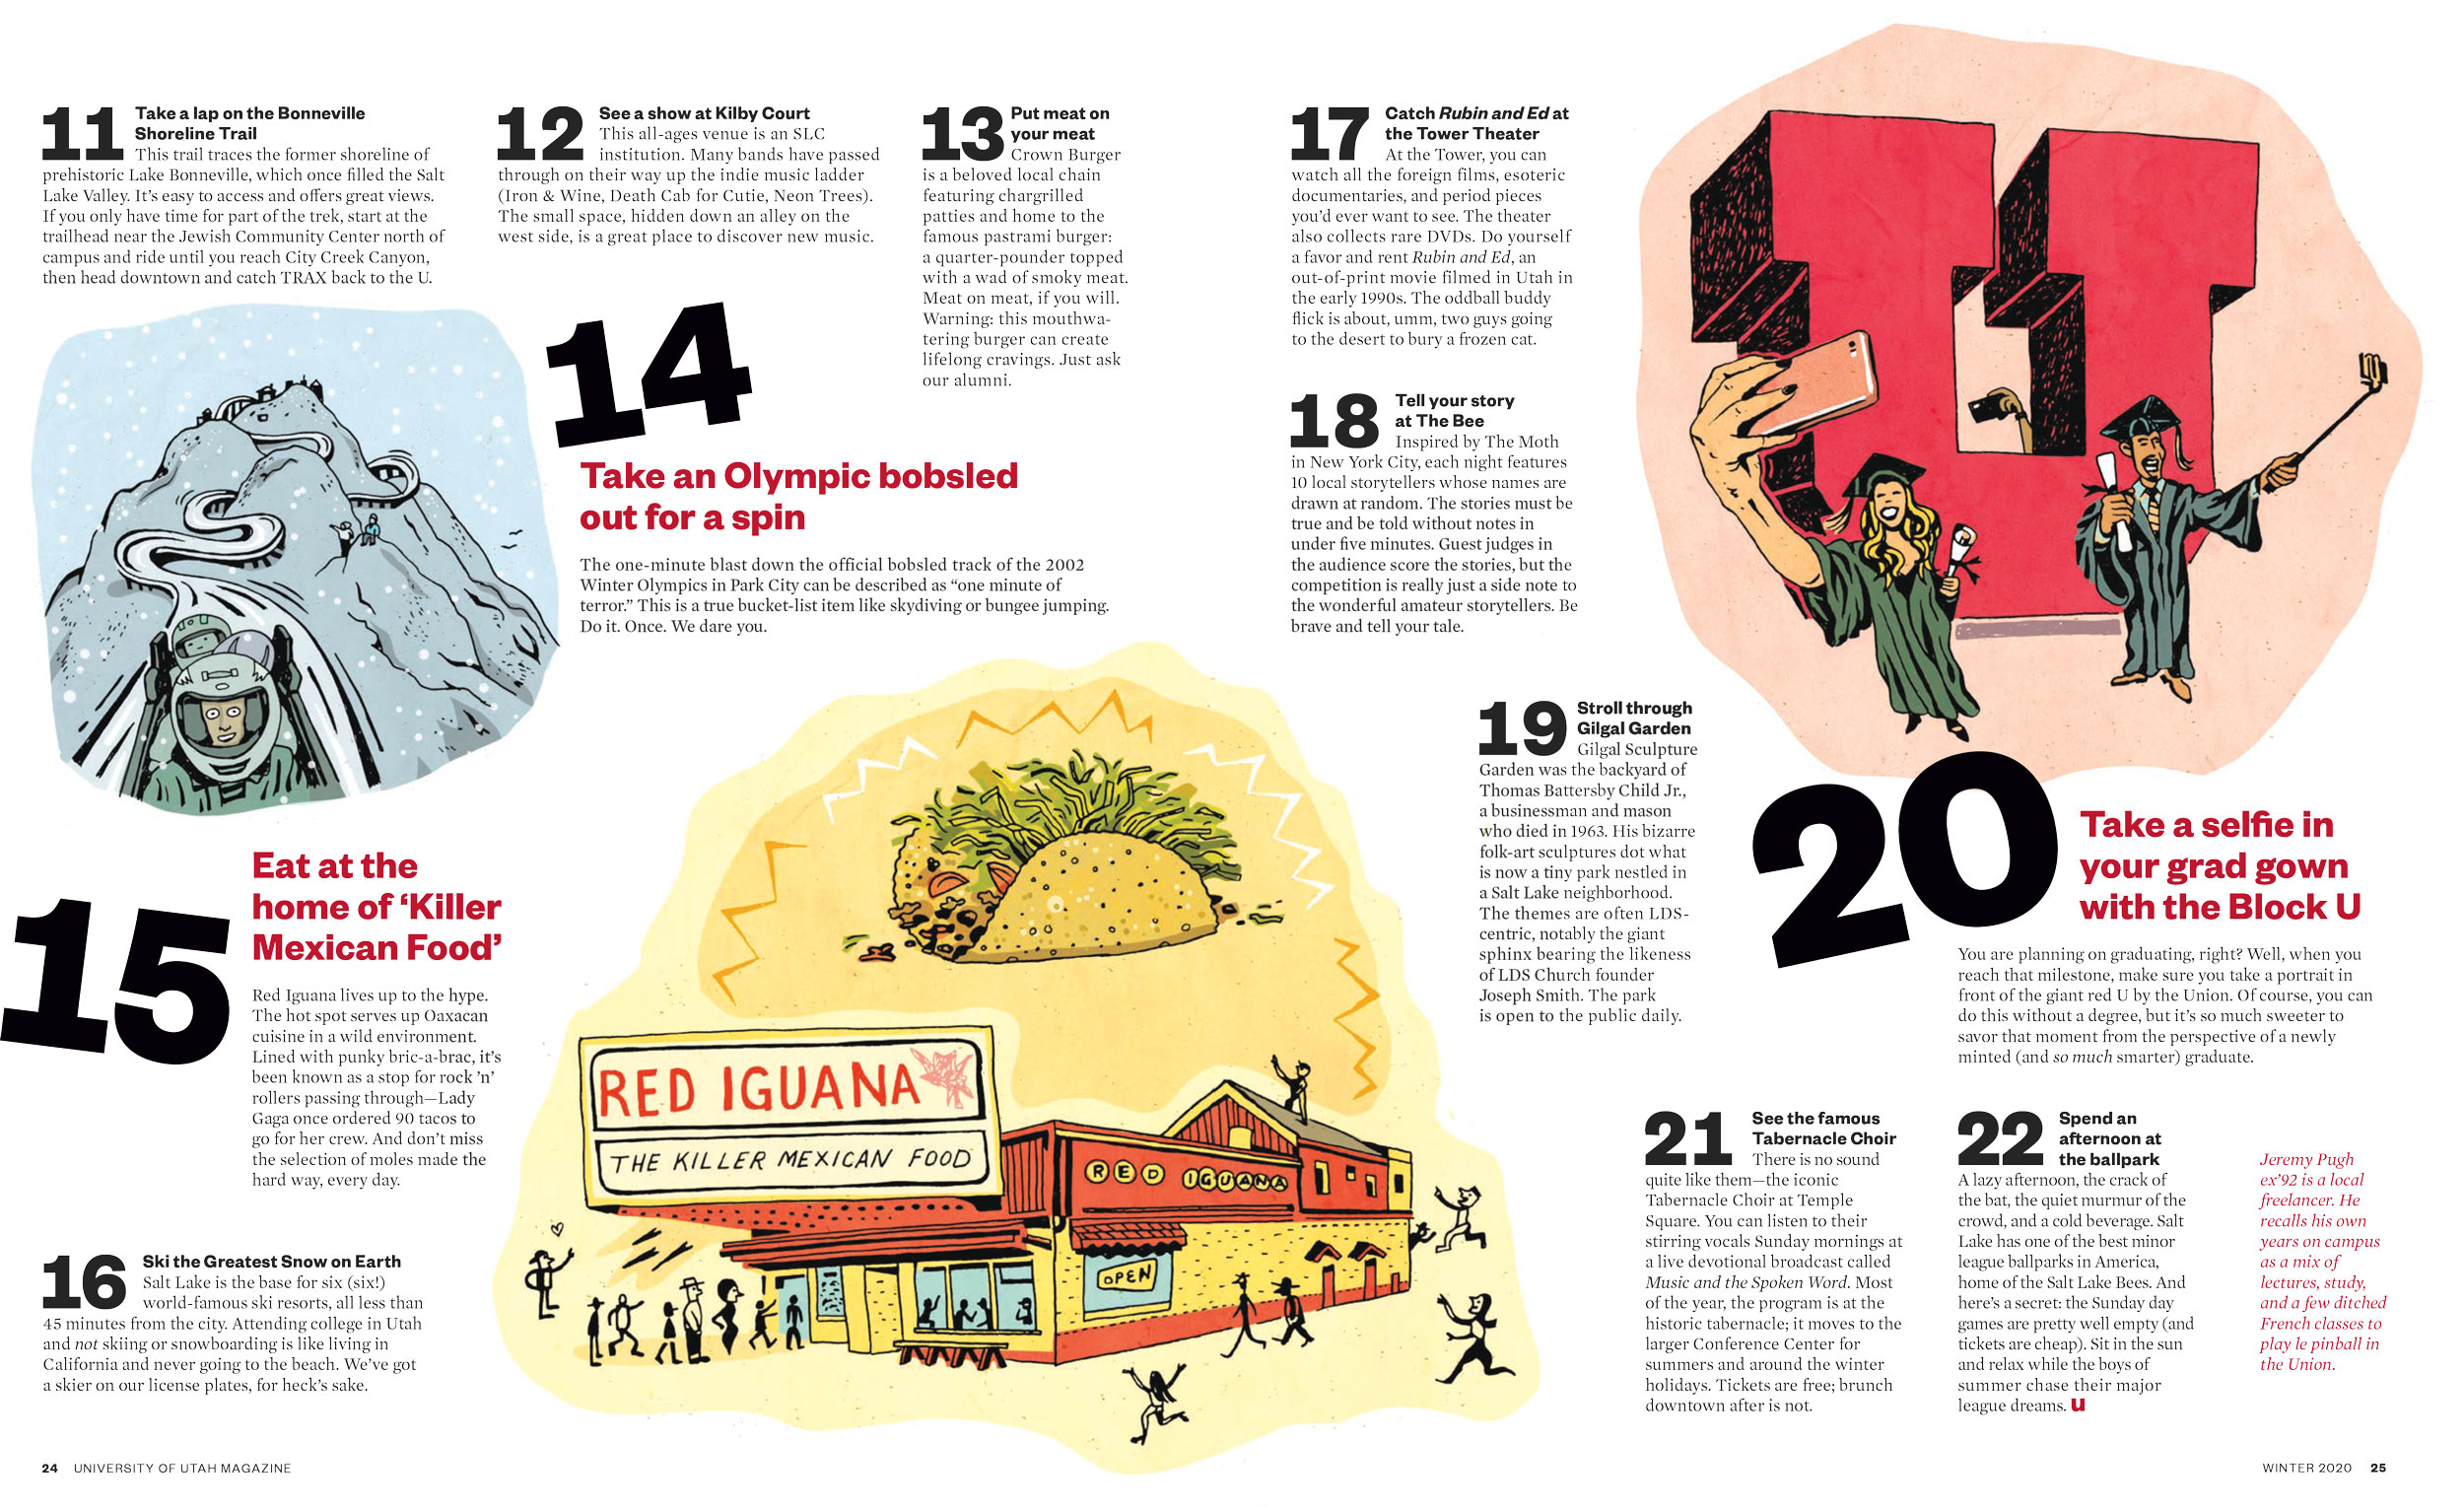 John S. Dykes illustration University of Utah Magazine Winter 2020 "The Bucket List."